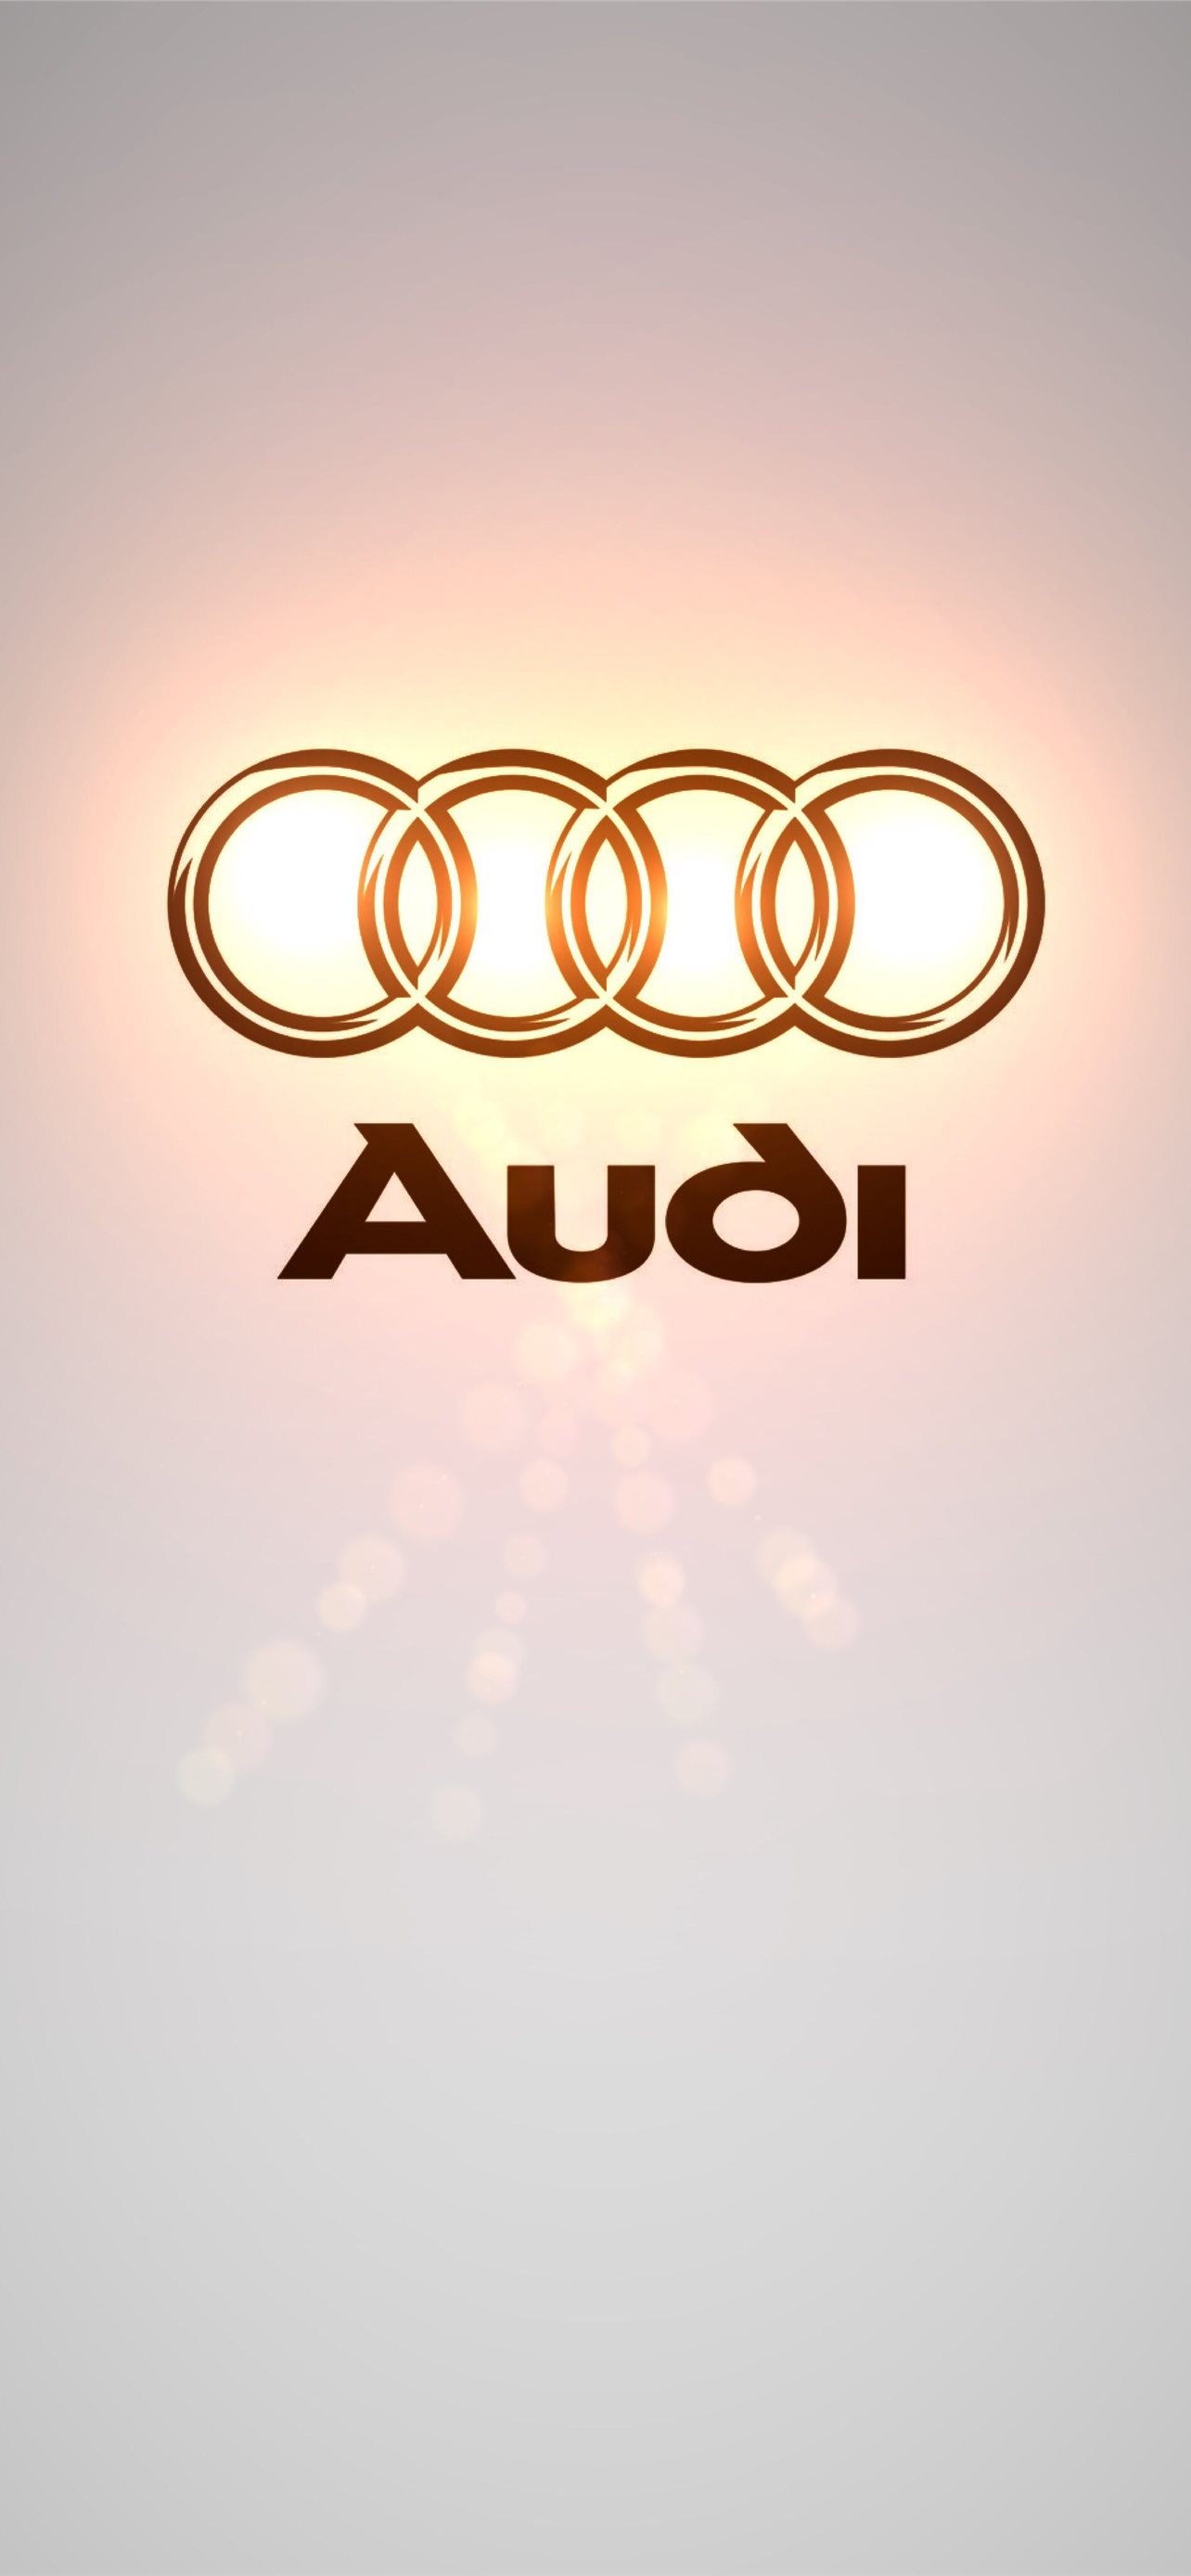 audi logo iPhone Wallpapers Free Download